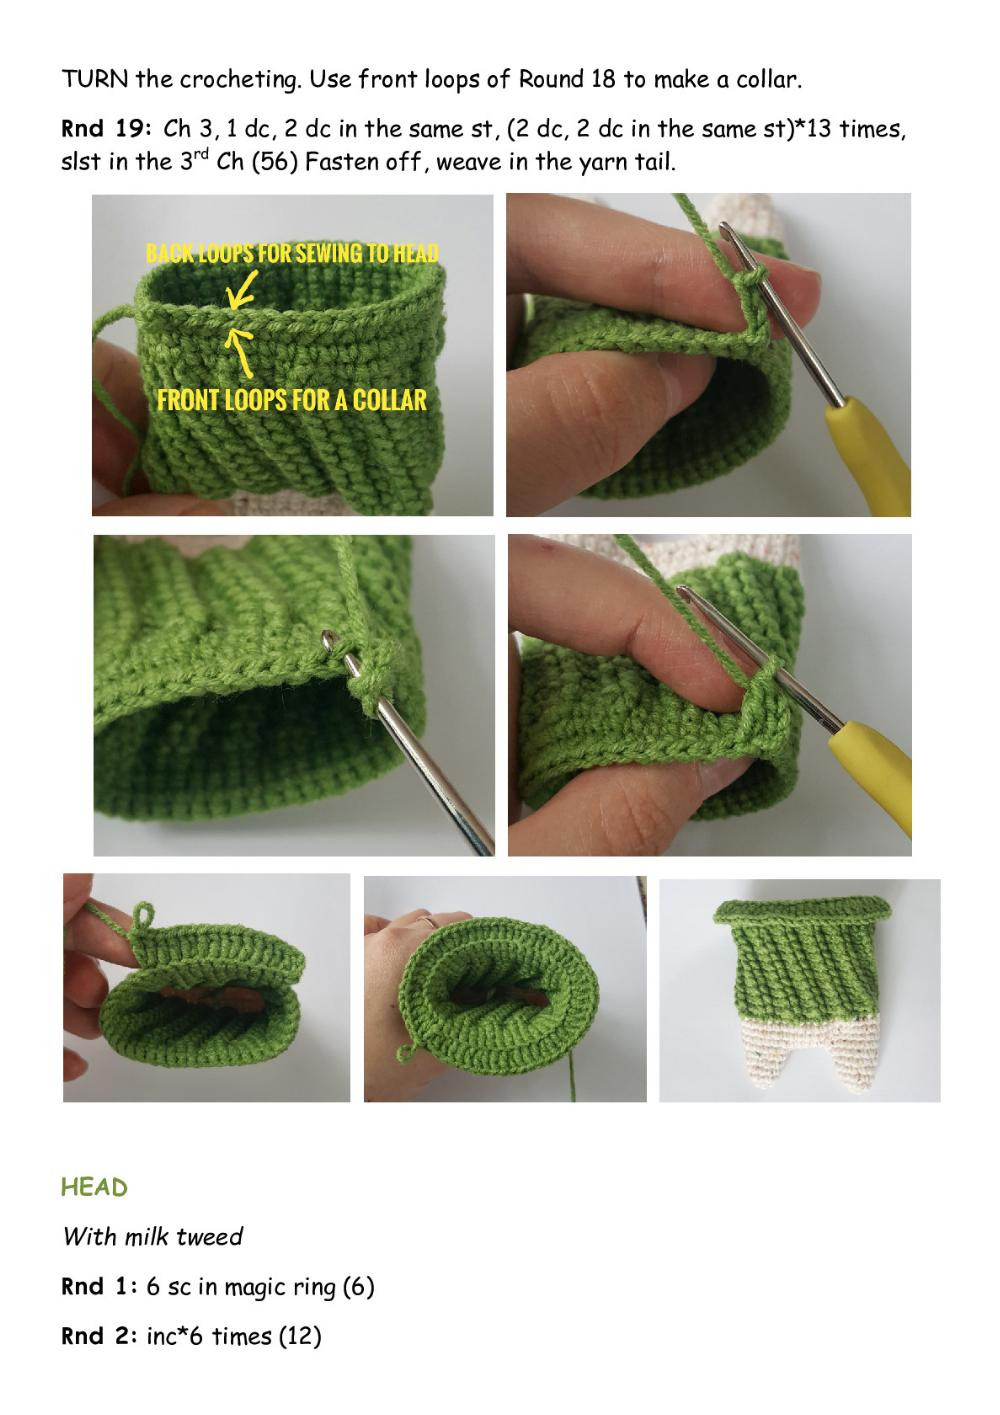 mimc the cactus crochet pattern